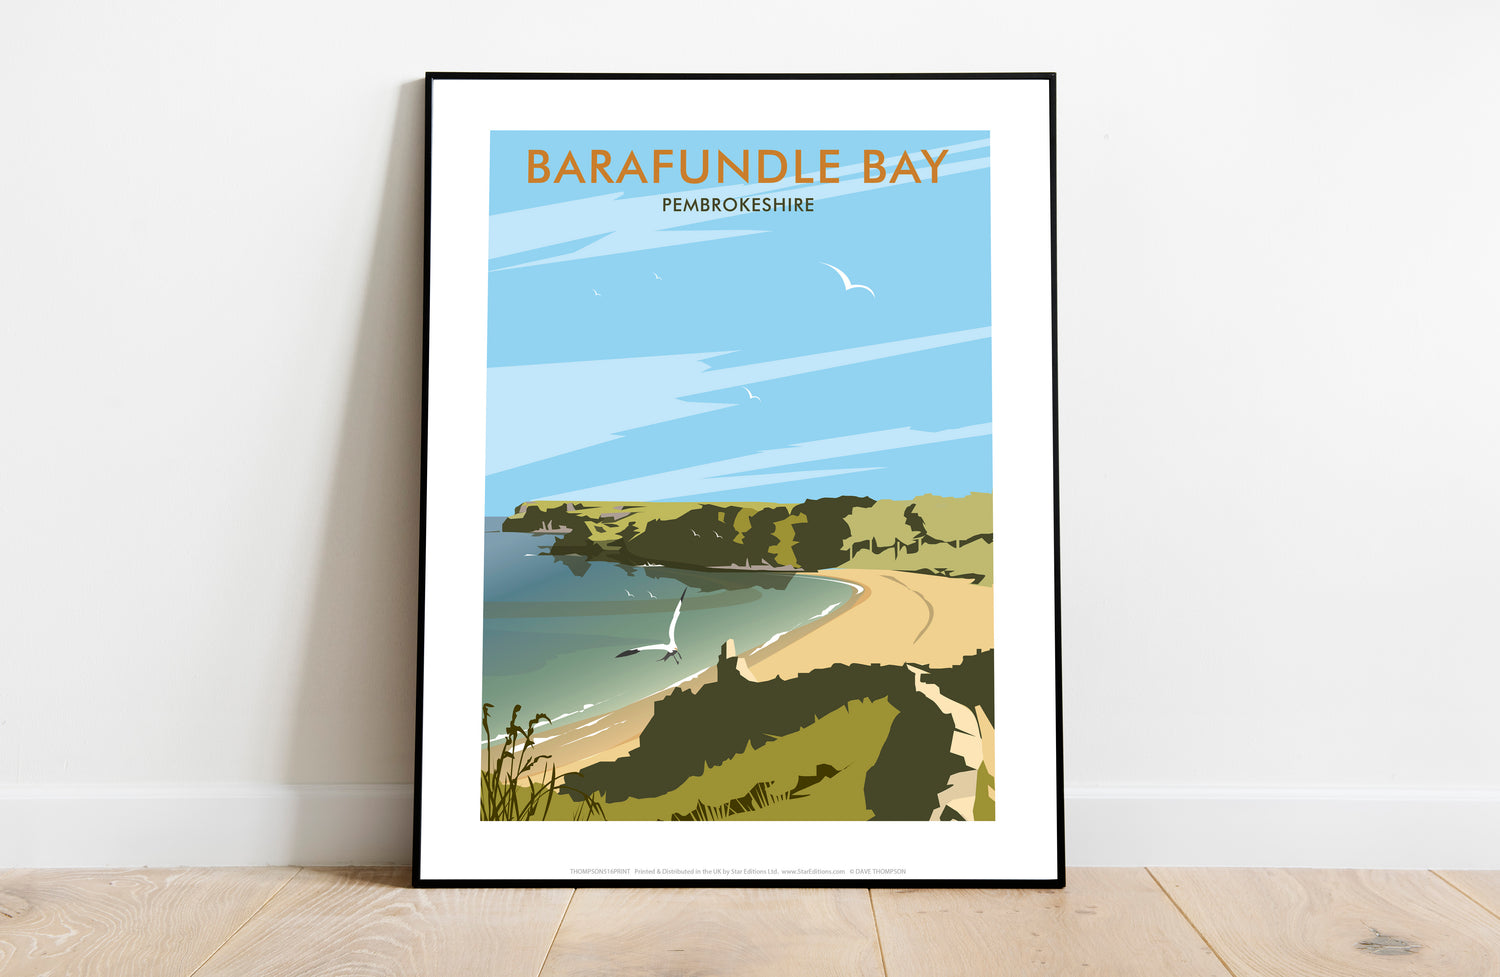 Barafundle Bay, Pembrokeshire - Art Print